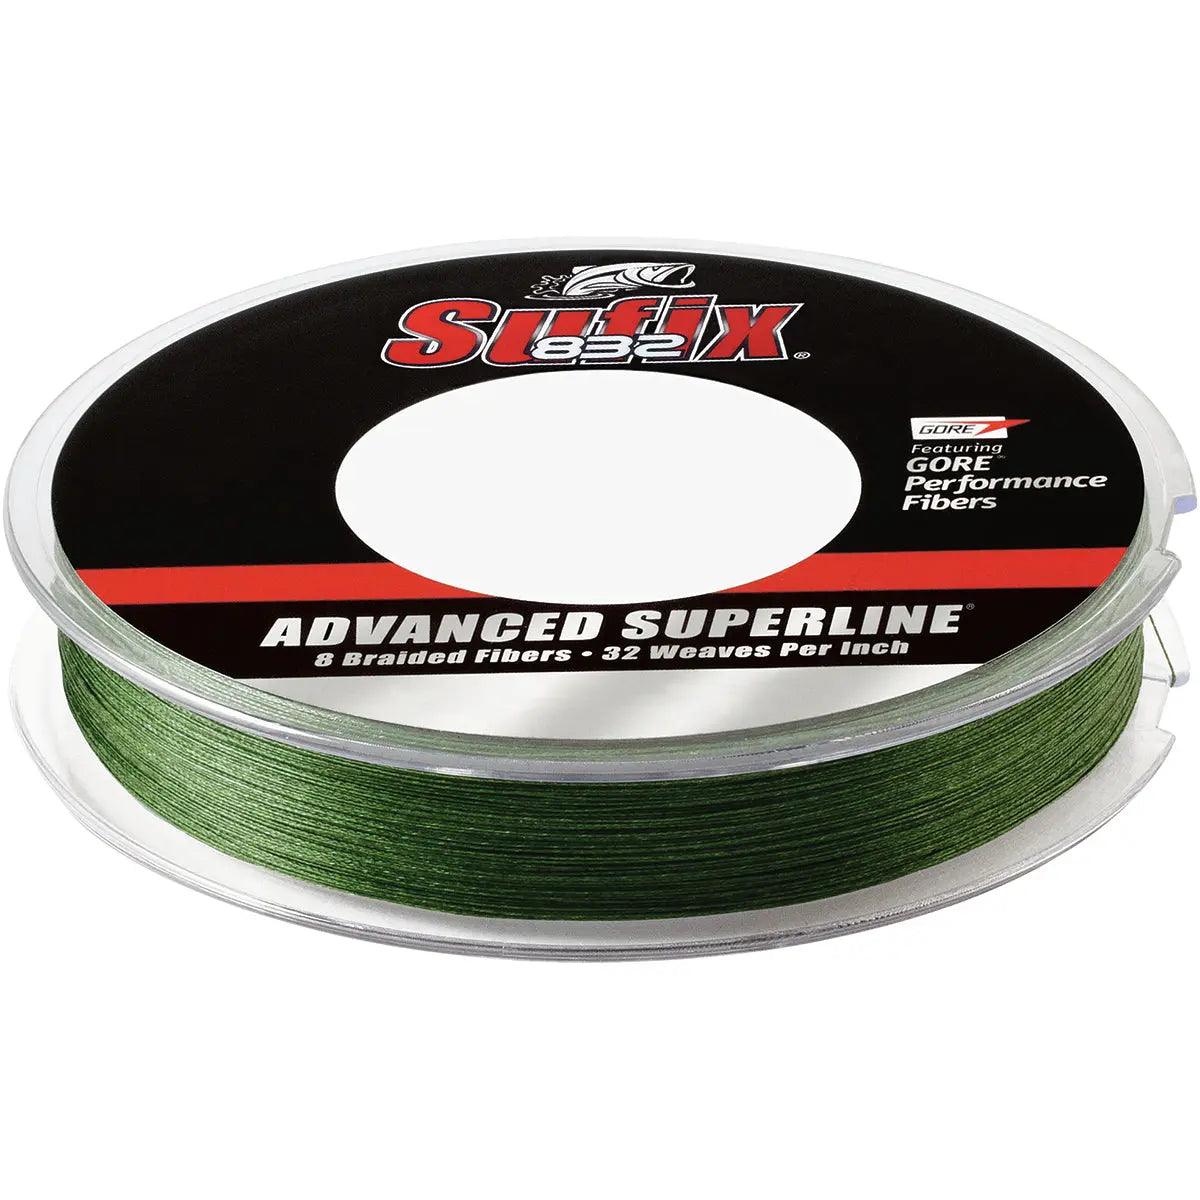 Sufix 150 Yard 832 Advanced Superline Braid Fishing Line - 8 lb. - Low-Vis Green Sufix